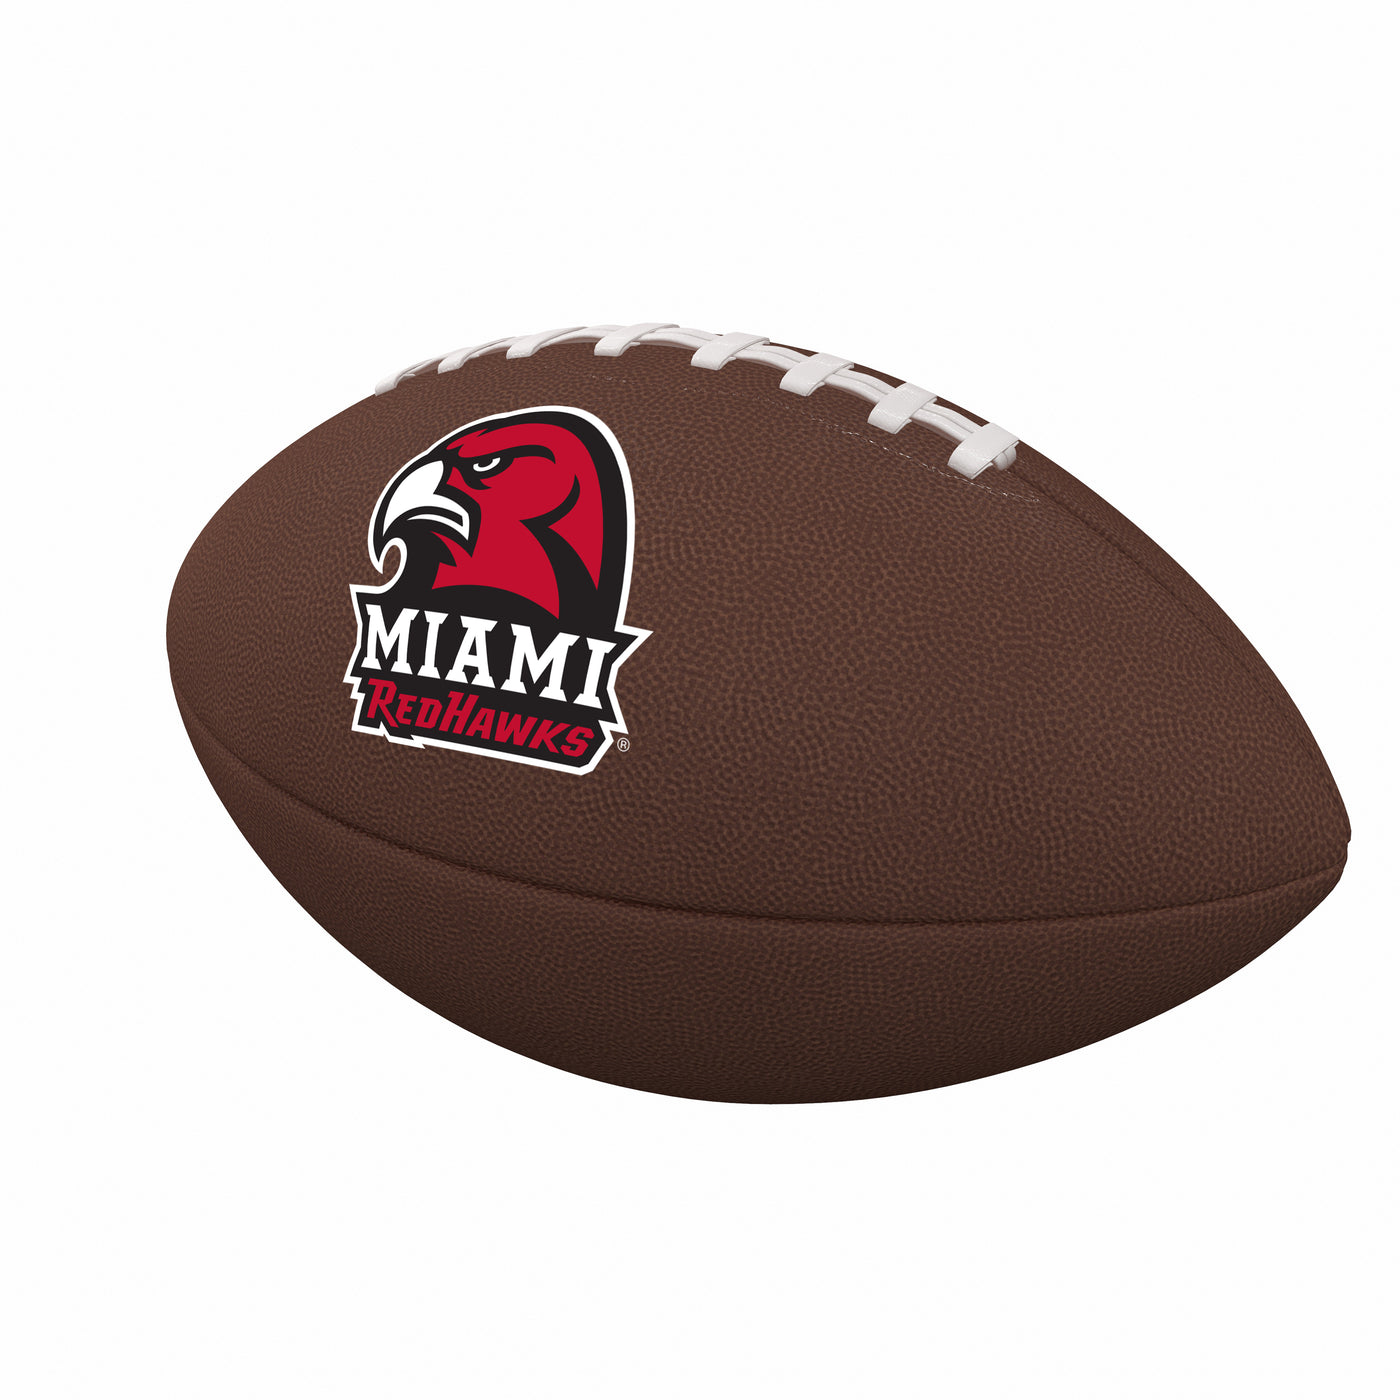 Miami Ohio Full Size Composite Football